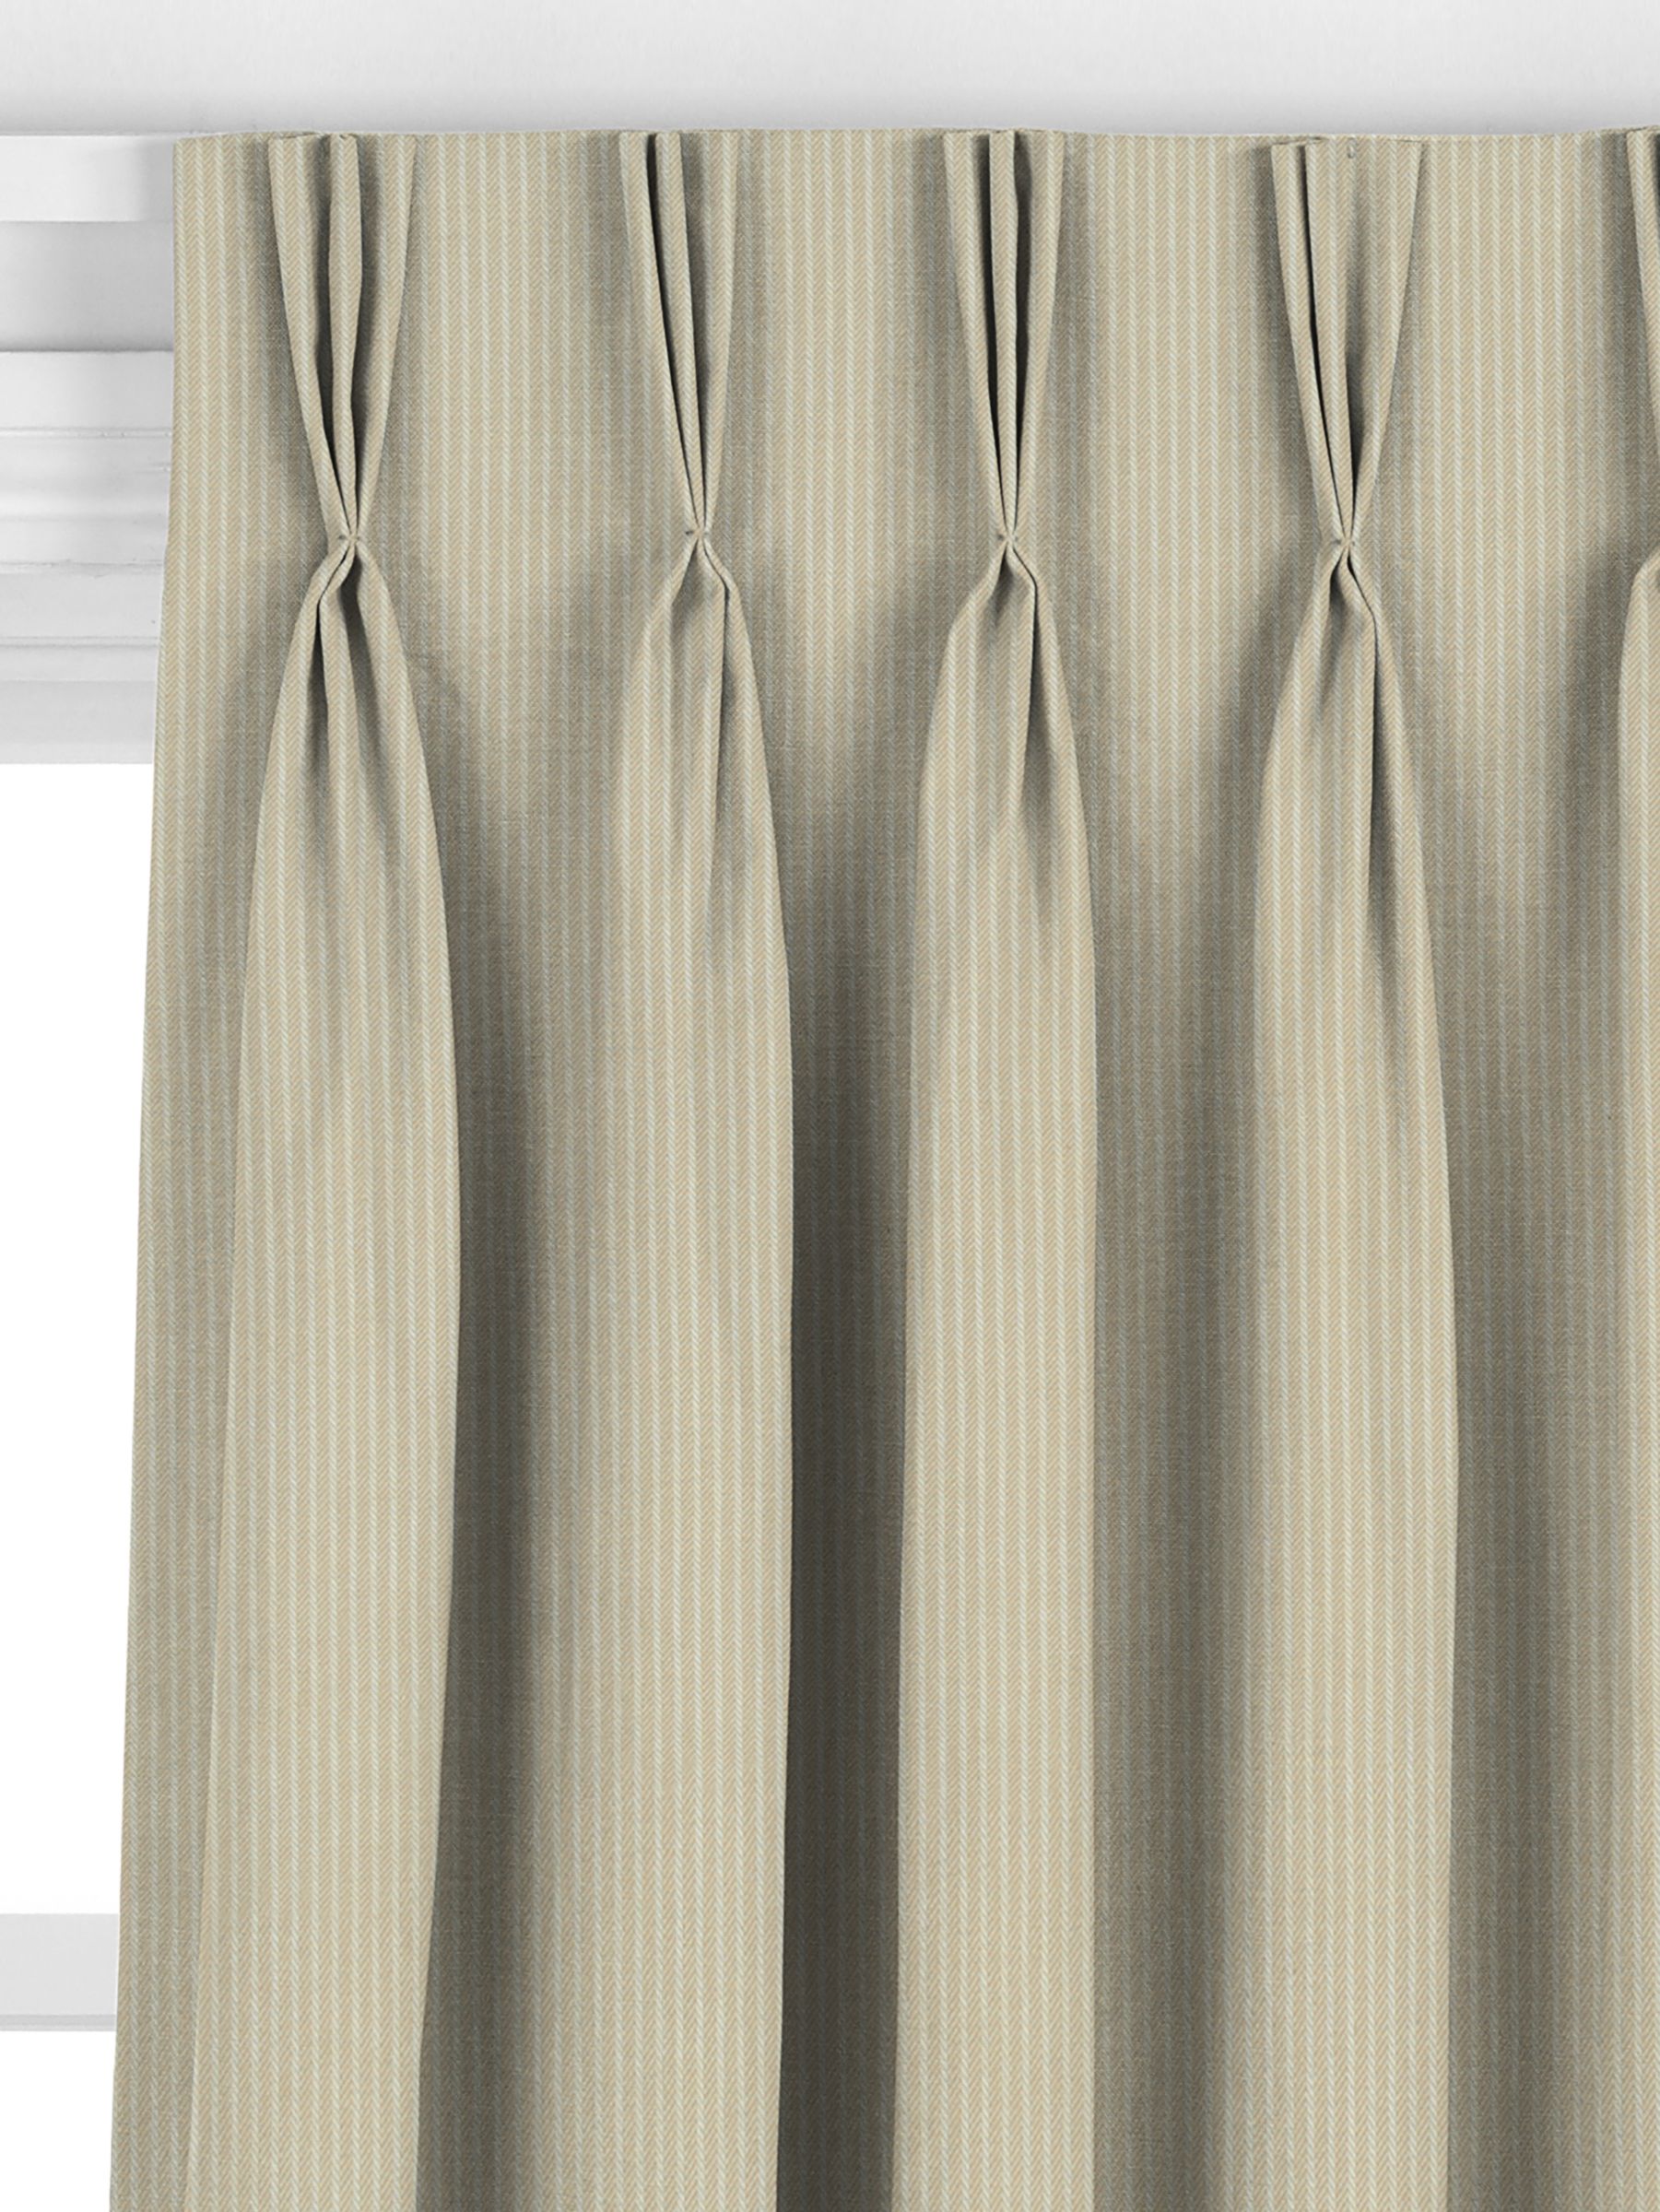 John Lewis Cotton Herringbone Stripe Made to Measure Curtains, Butter